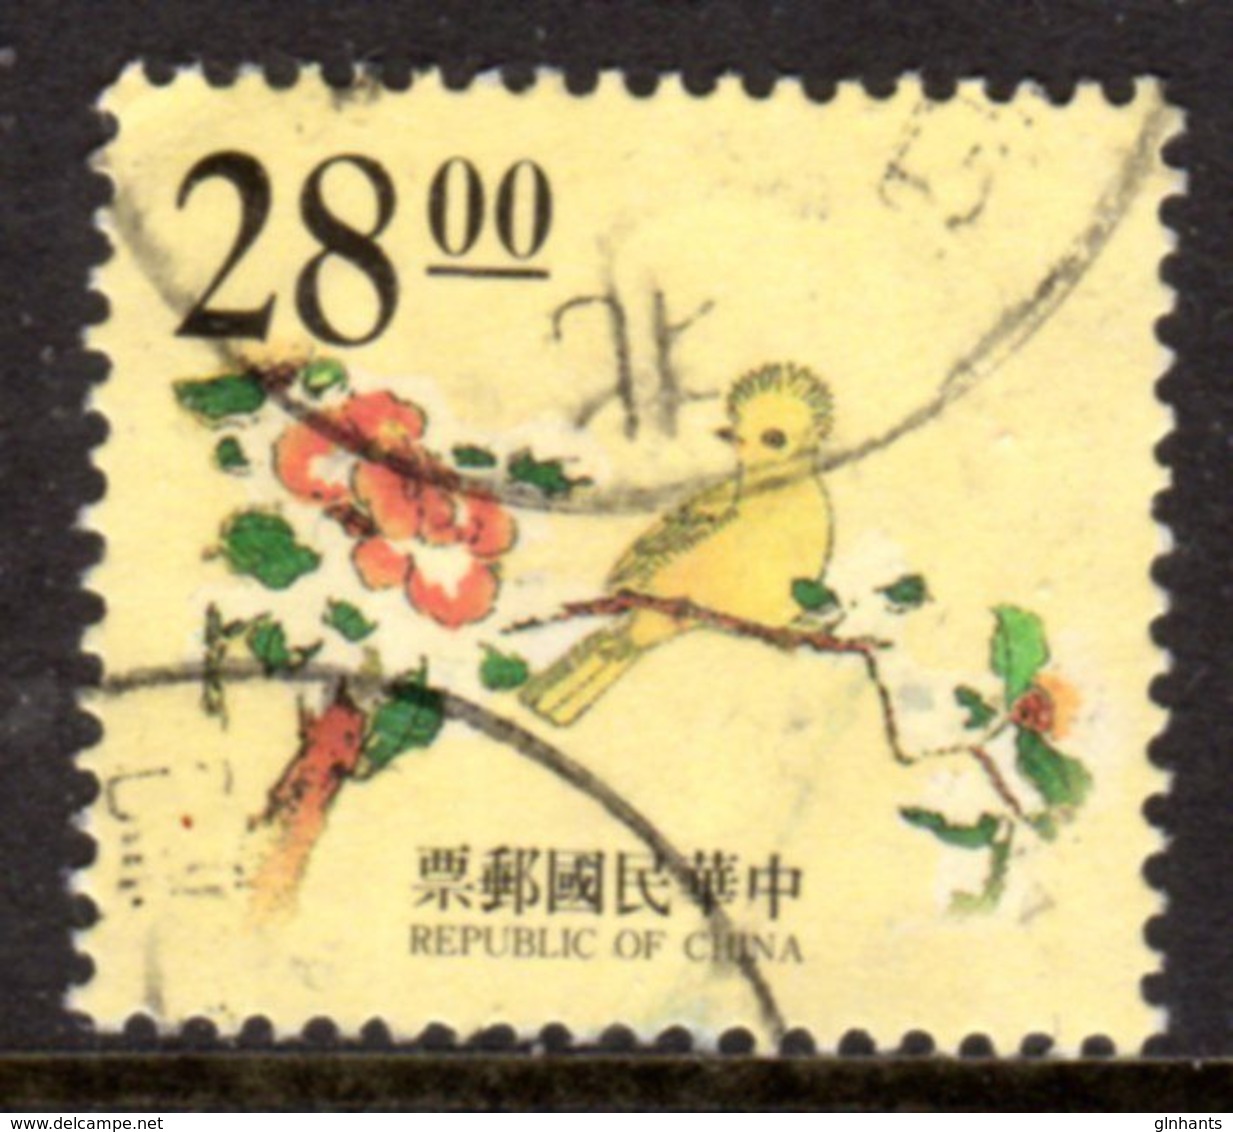 TAIWAN ROC - 1995 ENGRAVINGS YELLOW BIRDS $28 STAMP FINE USED SG 2267 - Gebruikt